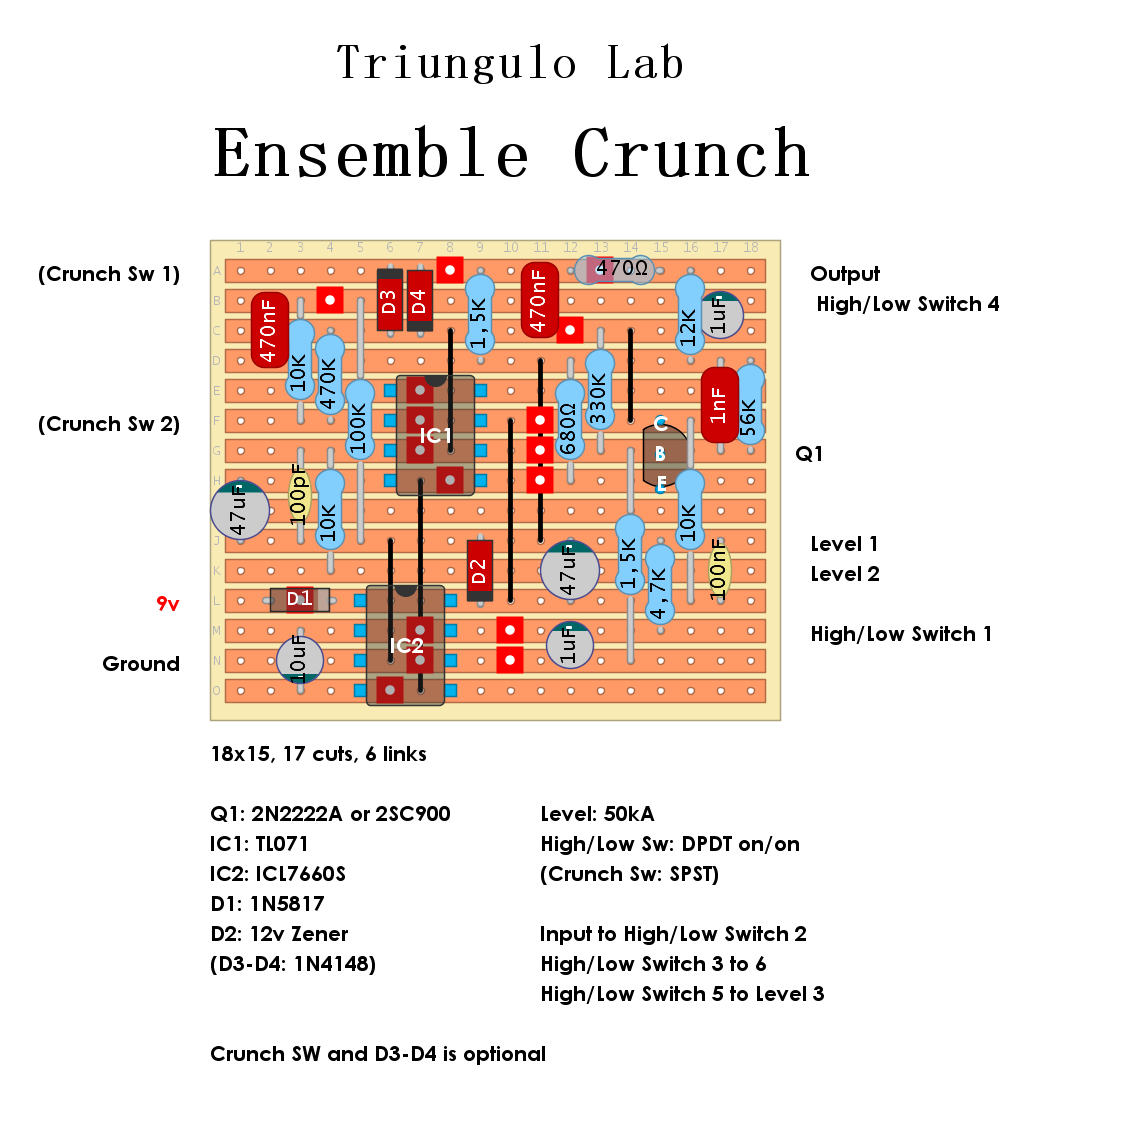 Dirtbox Layouts: Triungulo Lab Ensemble Crunch